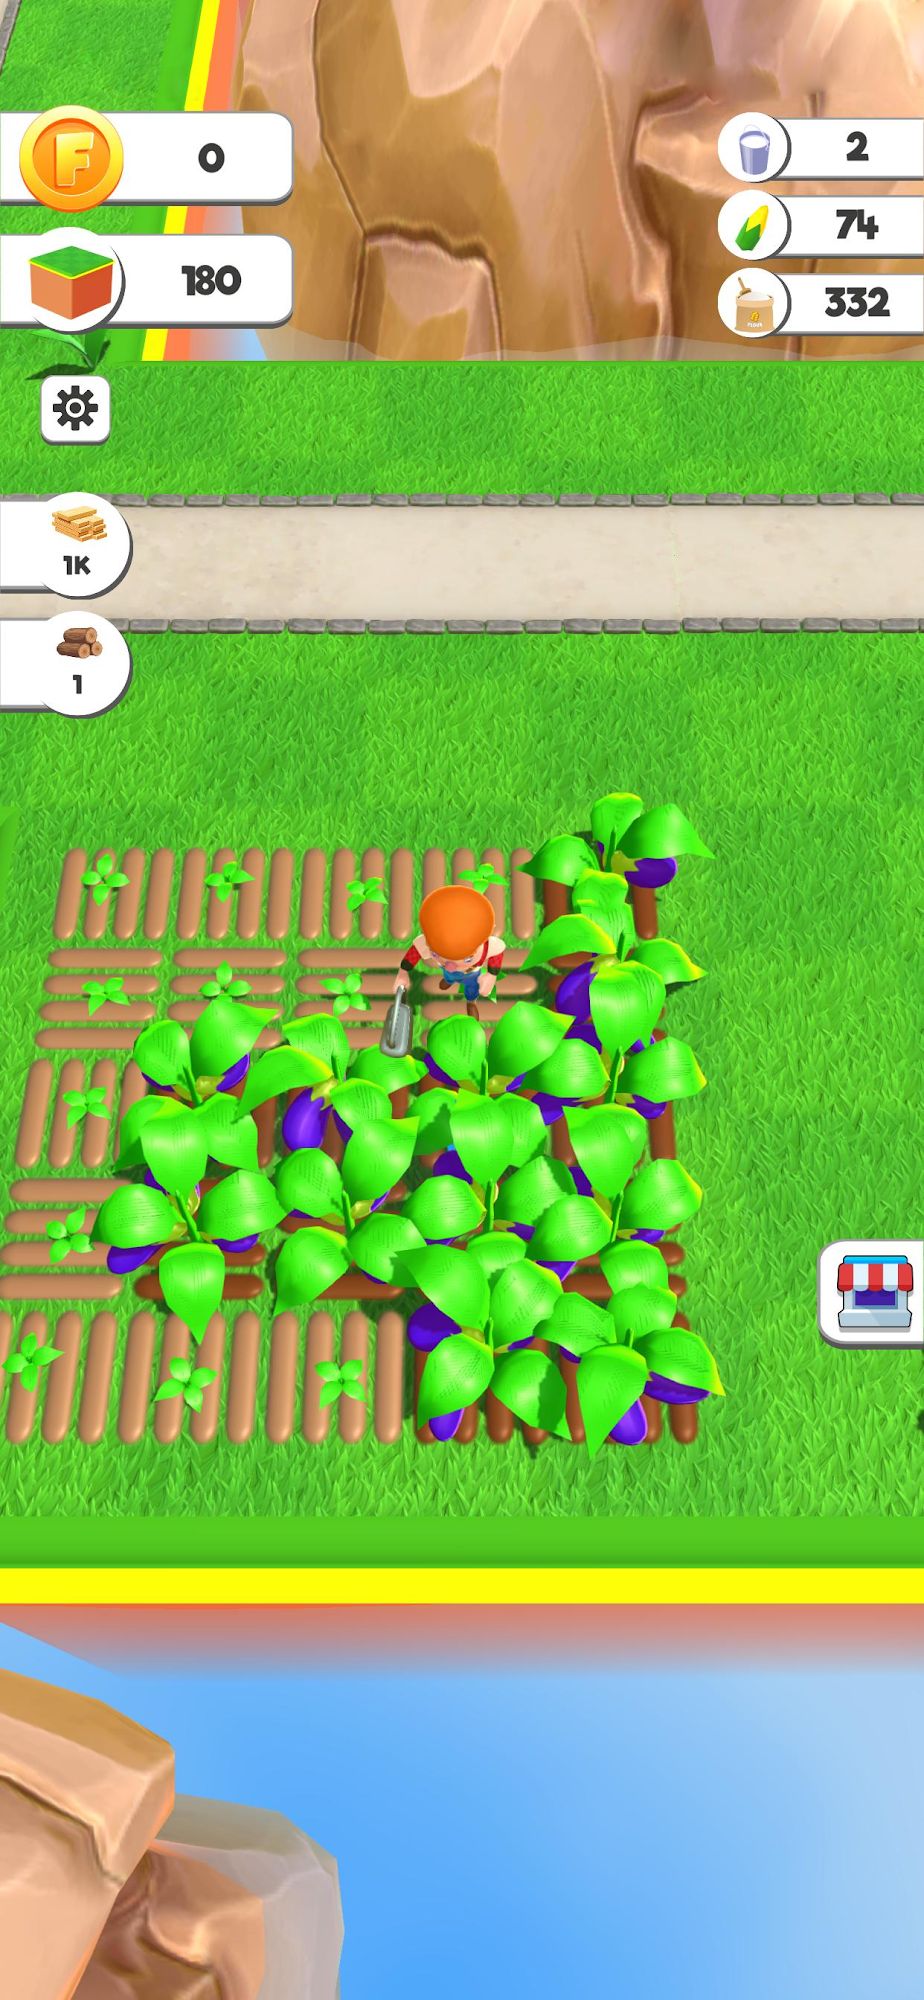 Download Farm Fast - Farming Idle Game für Android kostenlos.